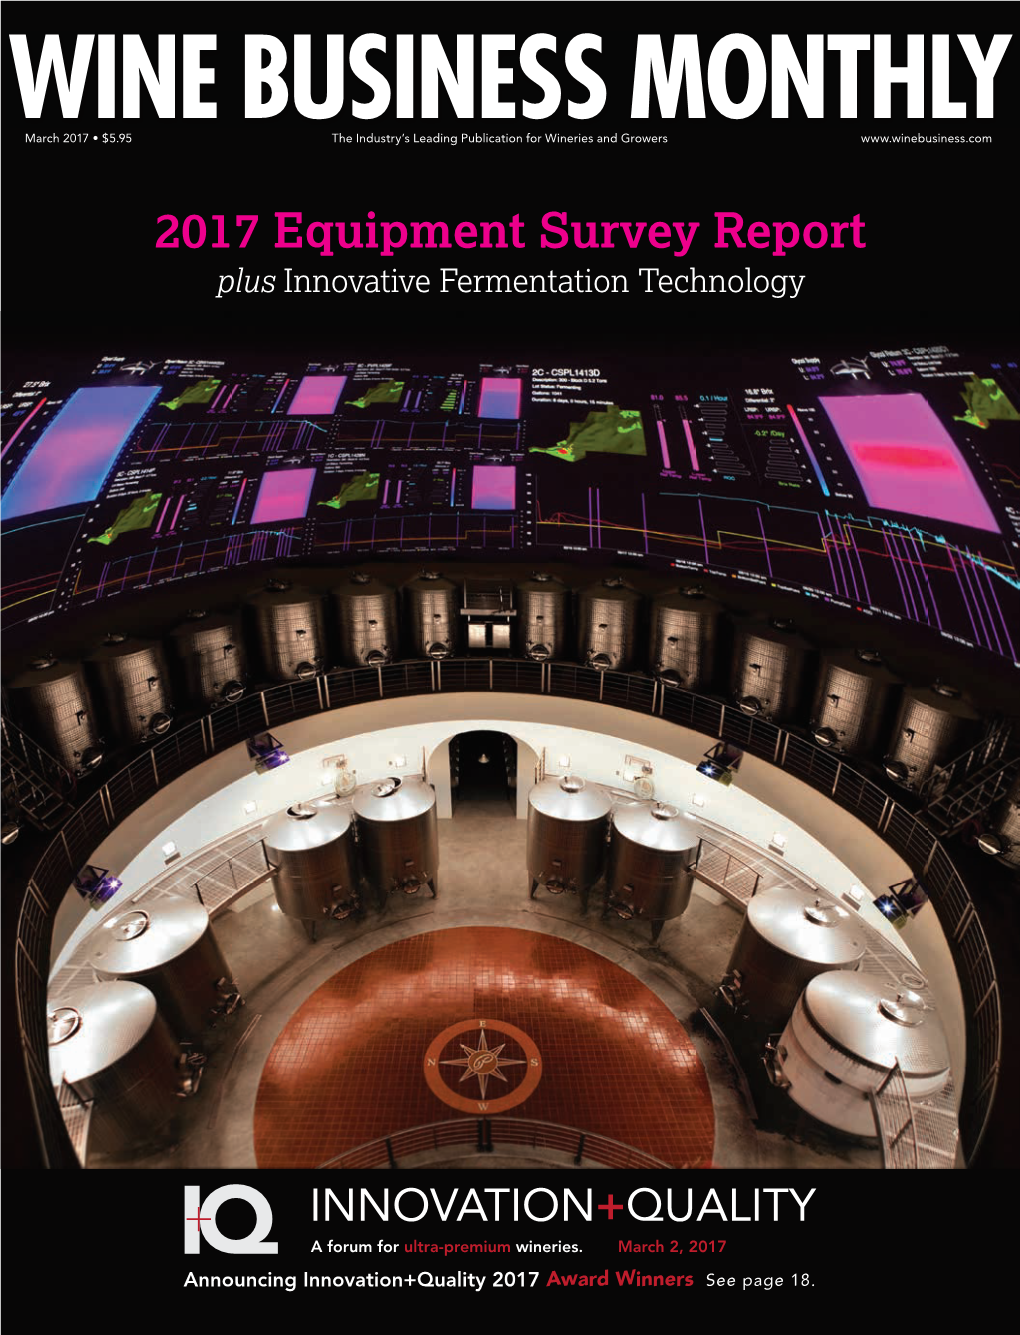 2017 Equipment Survey Report Plus Innovative Fermentation Technology